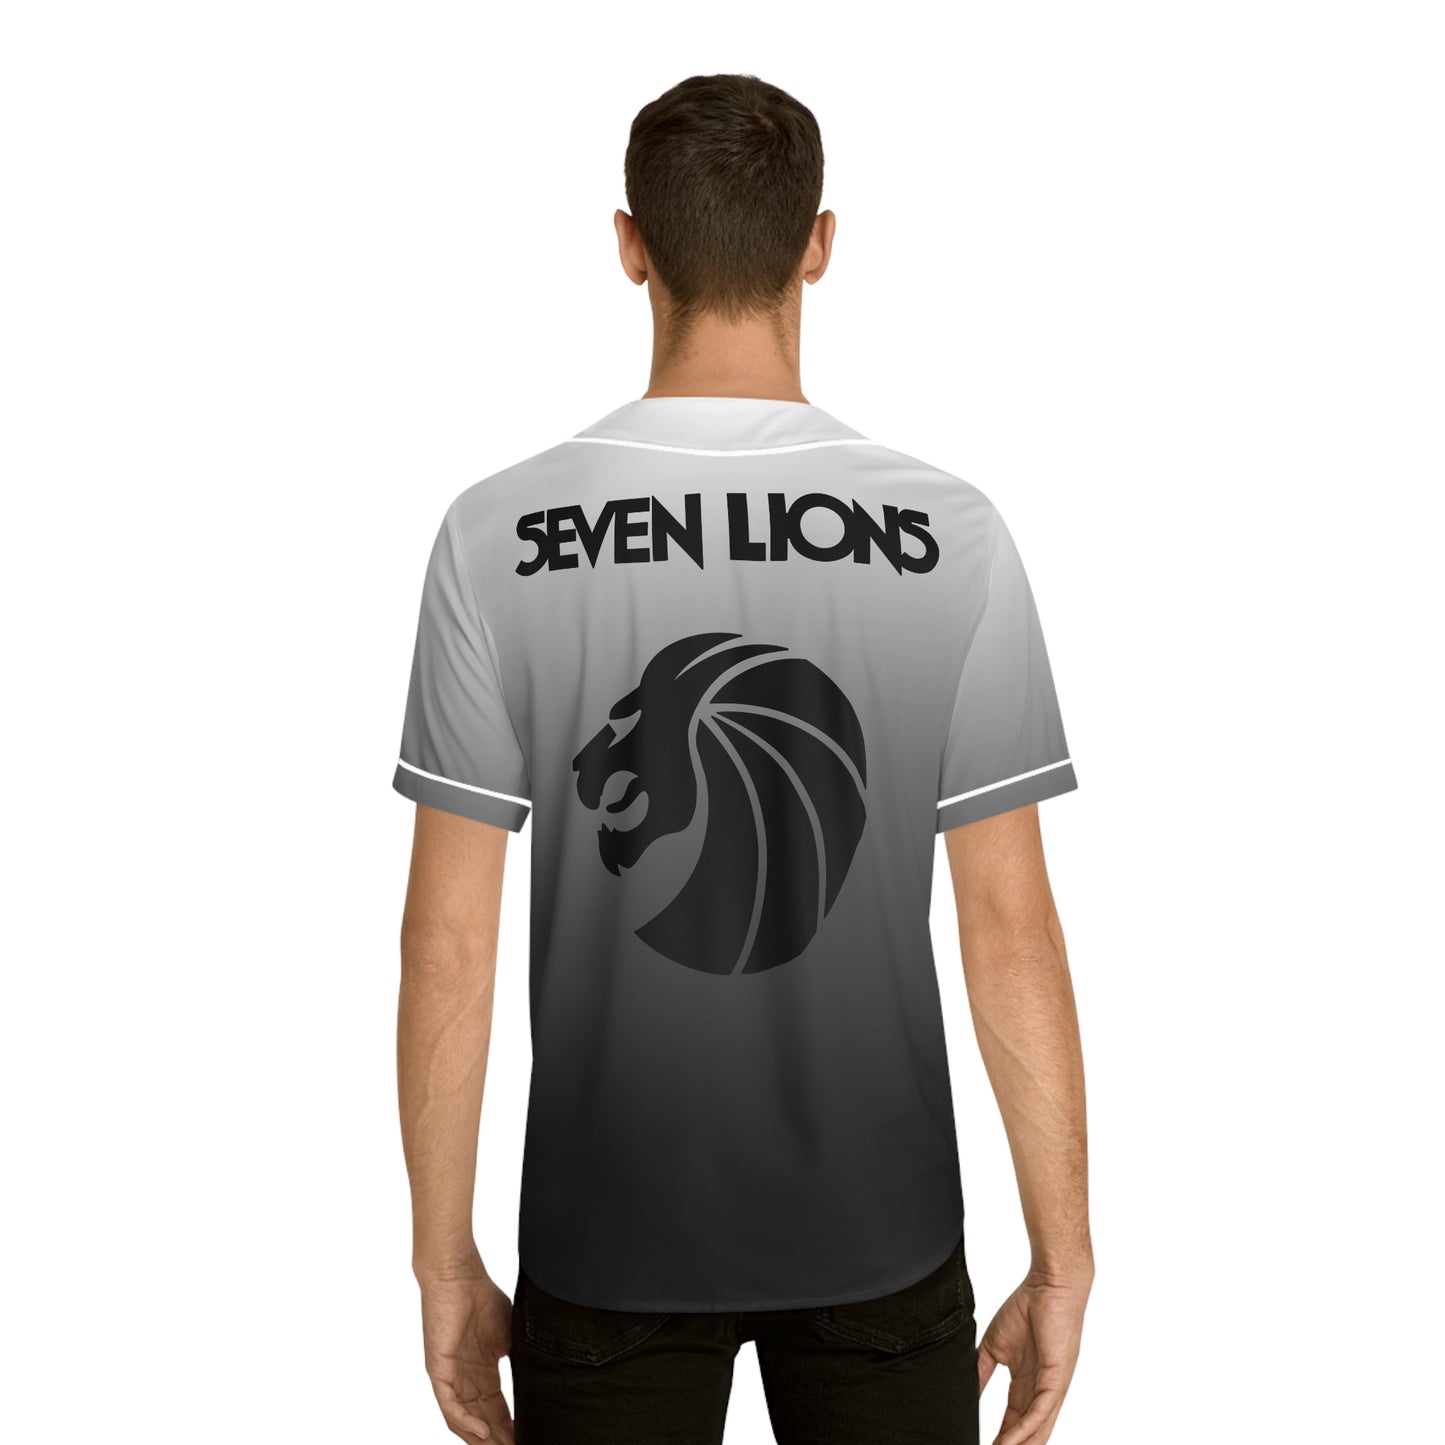 Seven Lions Jersey (Grey/Black)